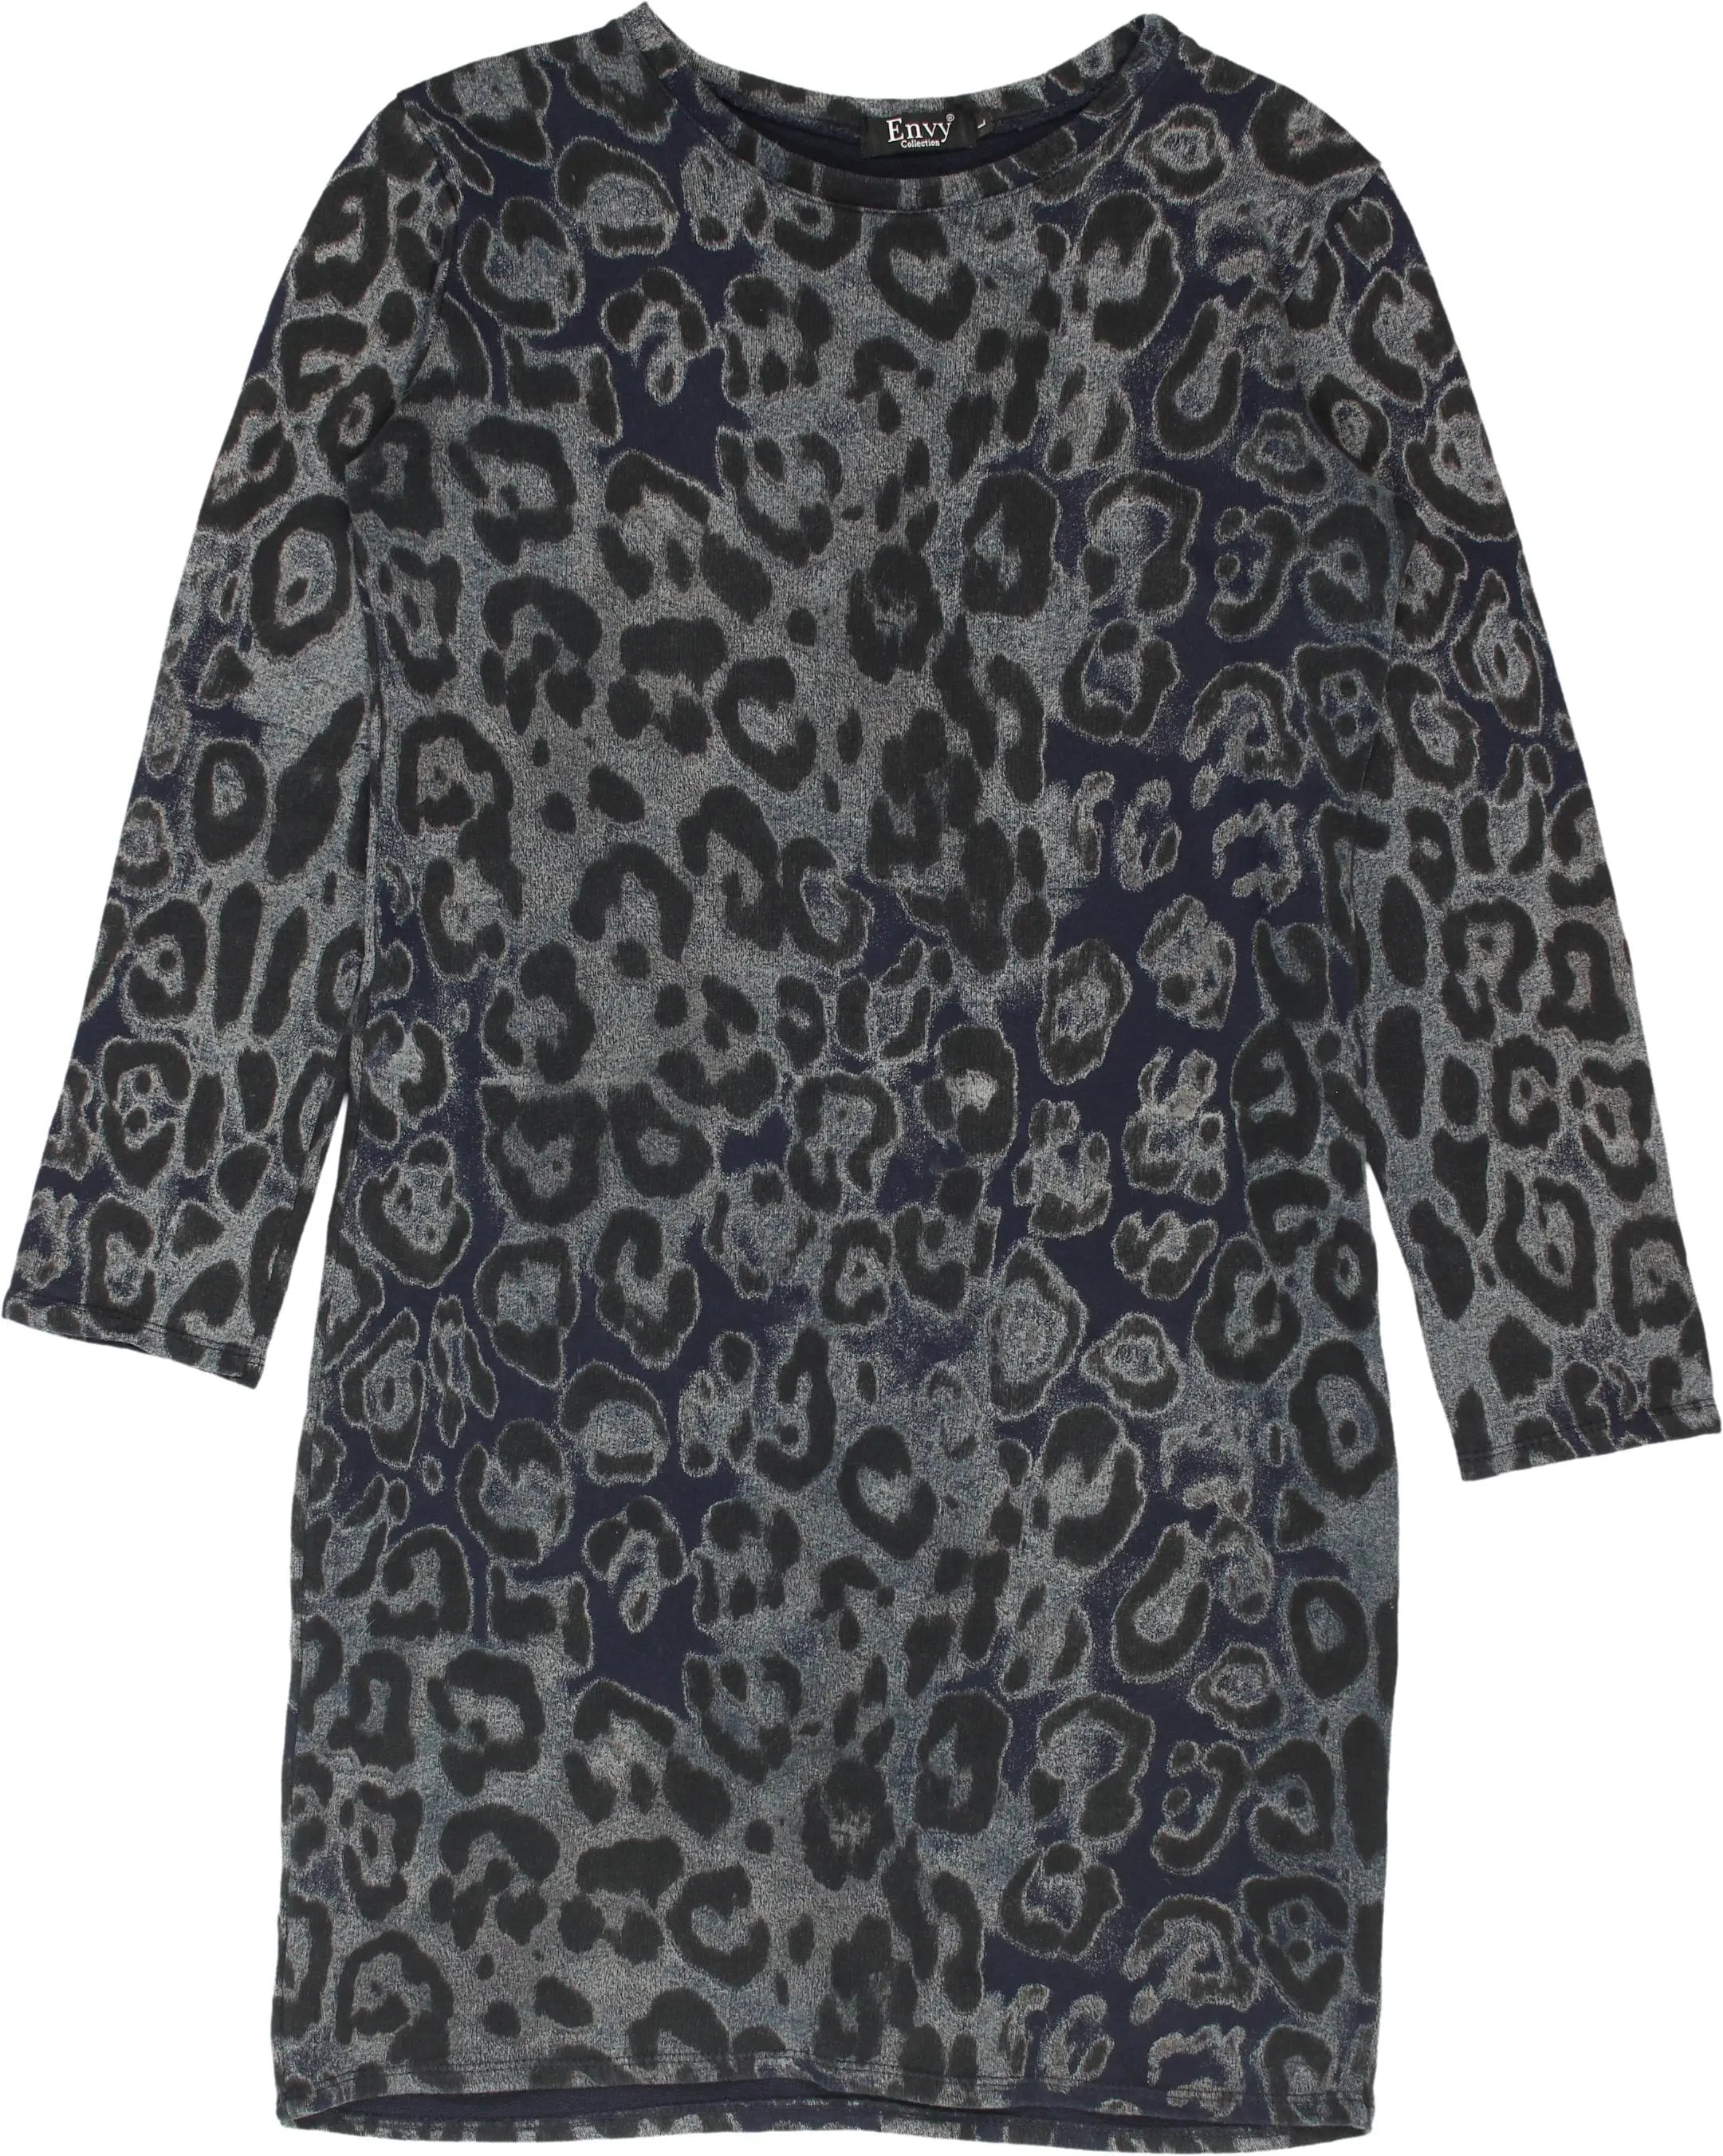 Envy - Leopard Print Dress- ThriftTale.com - Vintage and second handclothing